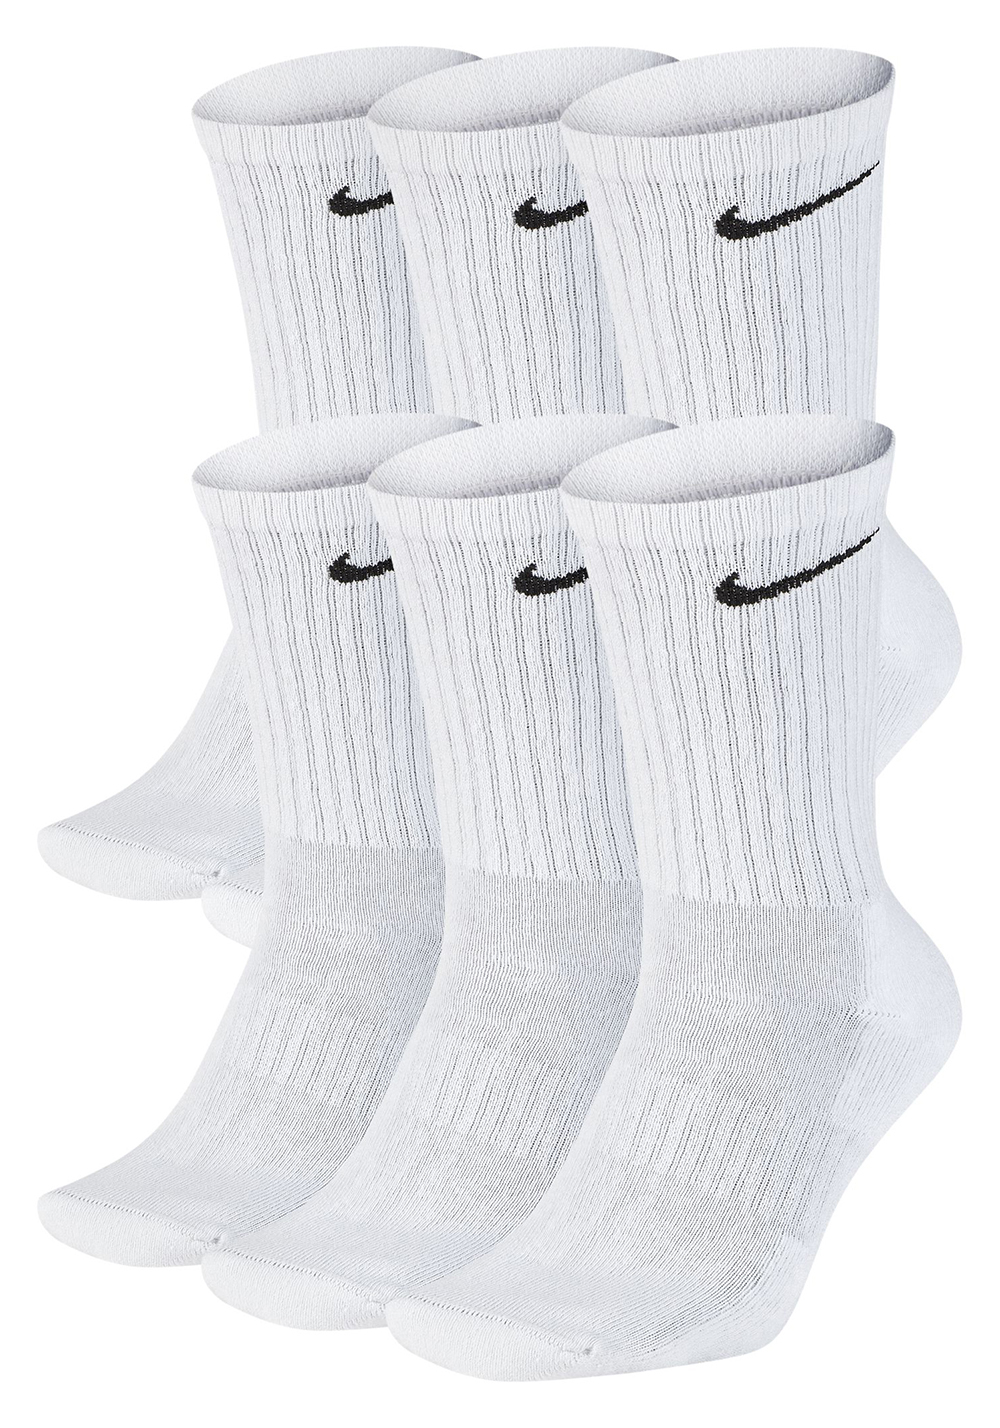 nike men's socks on sale